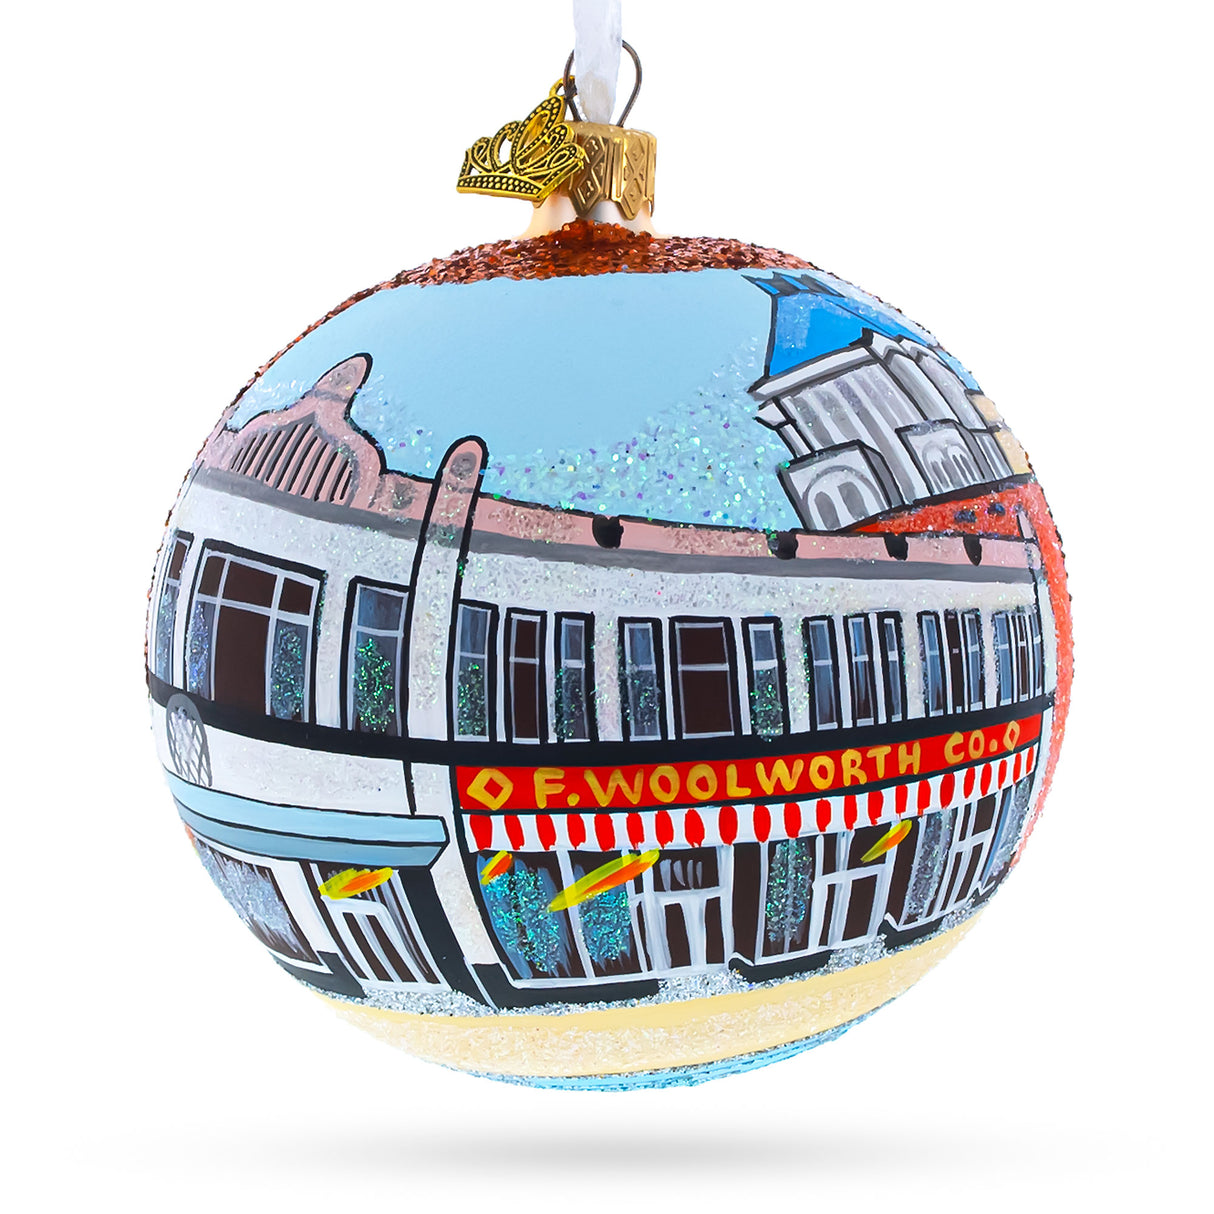 International Civil Rights Center & Museum, Greensboro, North Carolina, USA Glass Ball Christmas Ornament 4 Inches in Multi color, Round shape